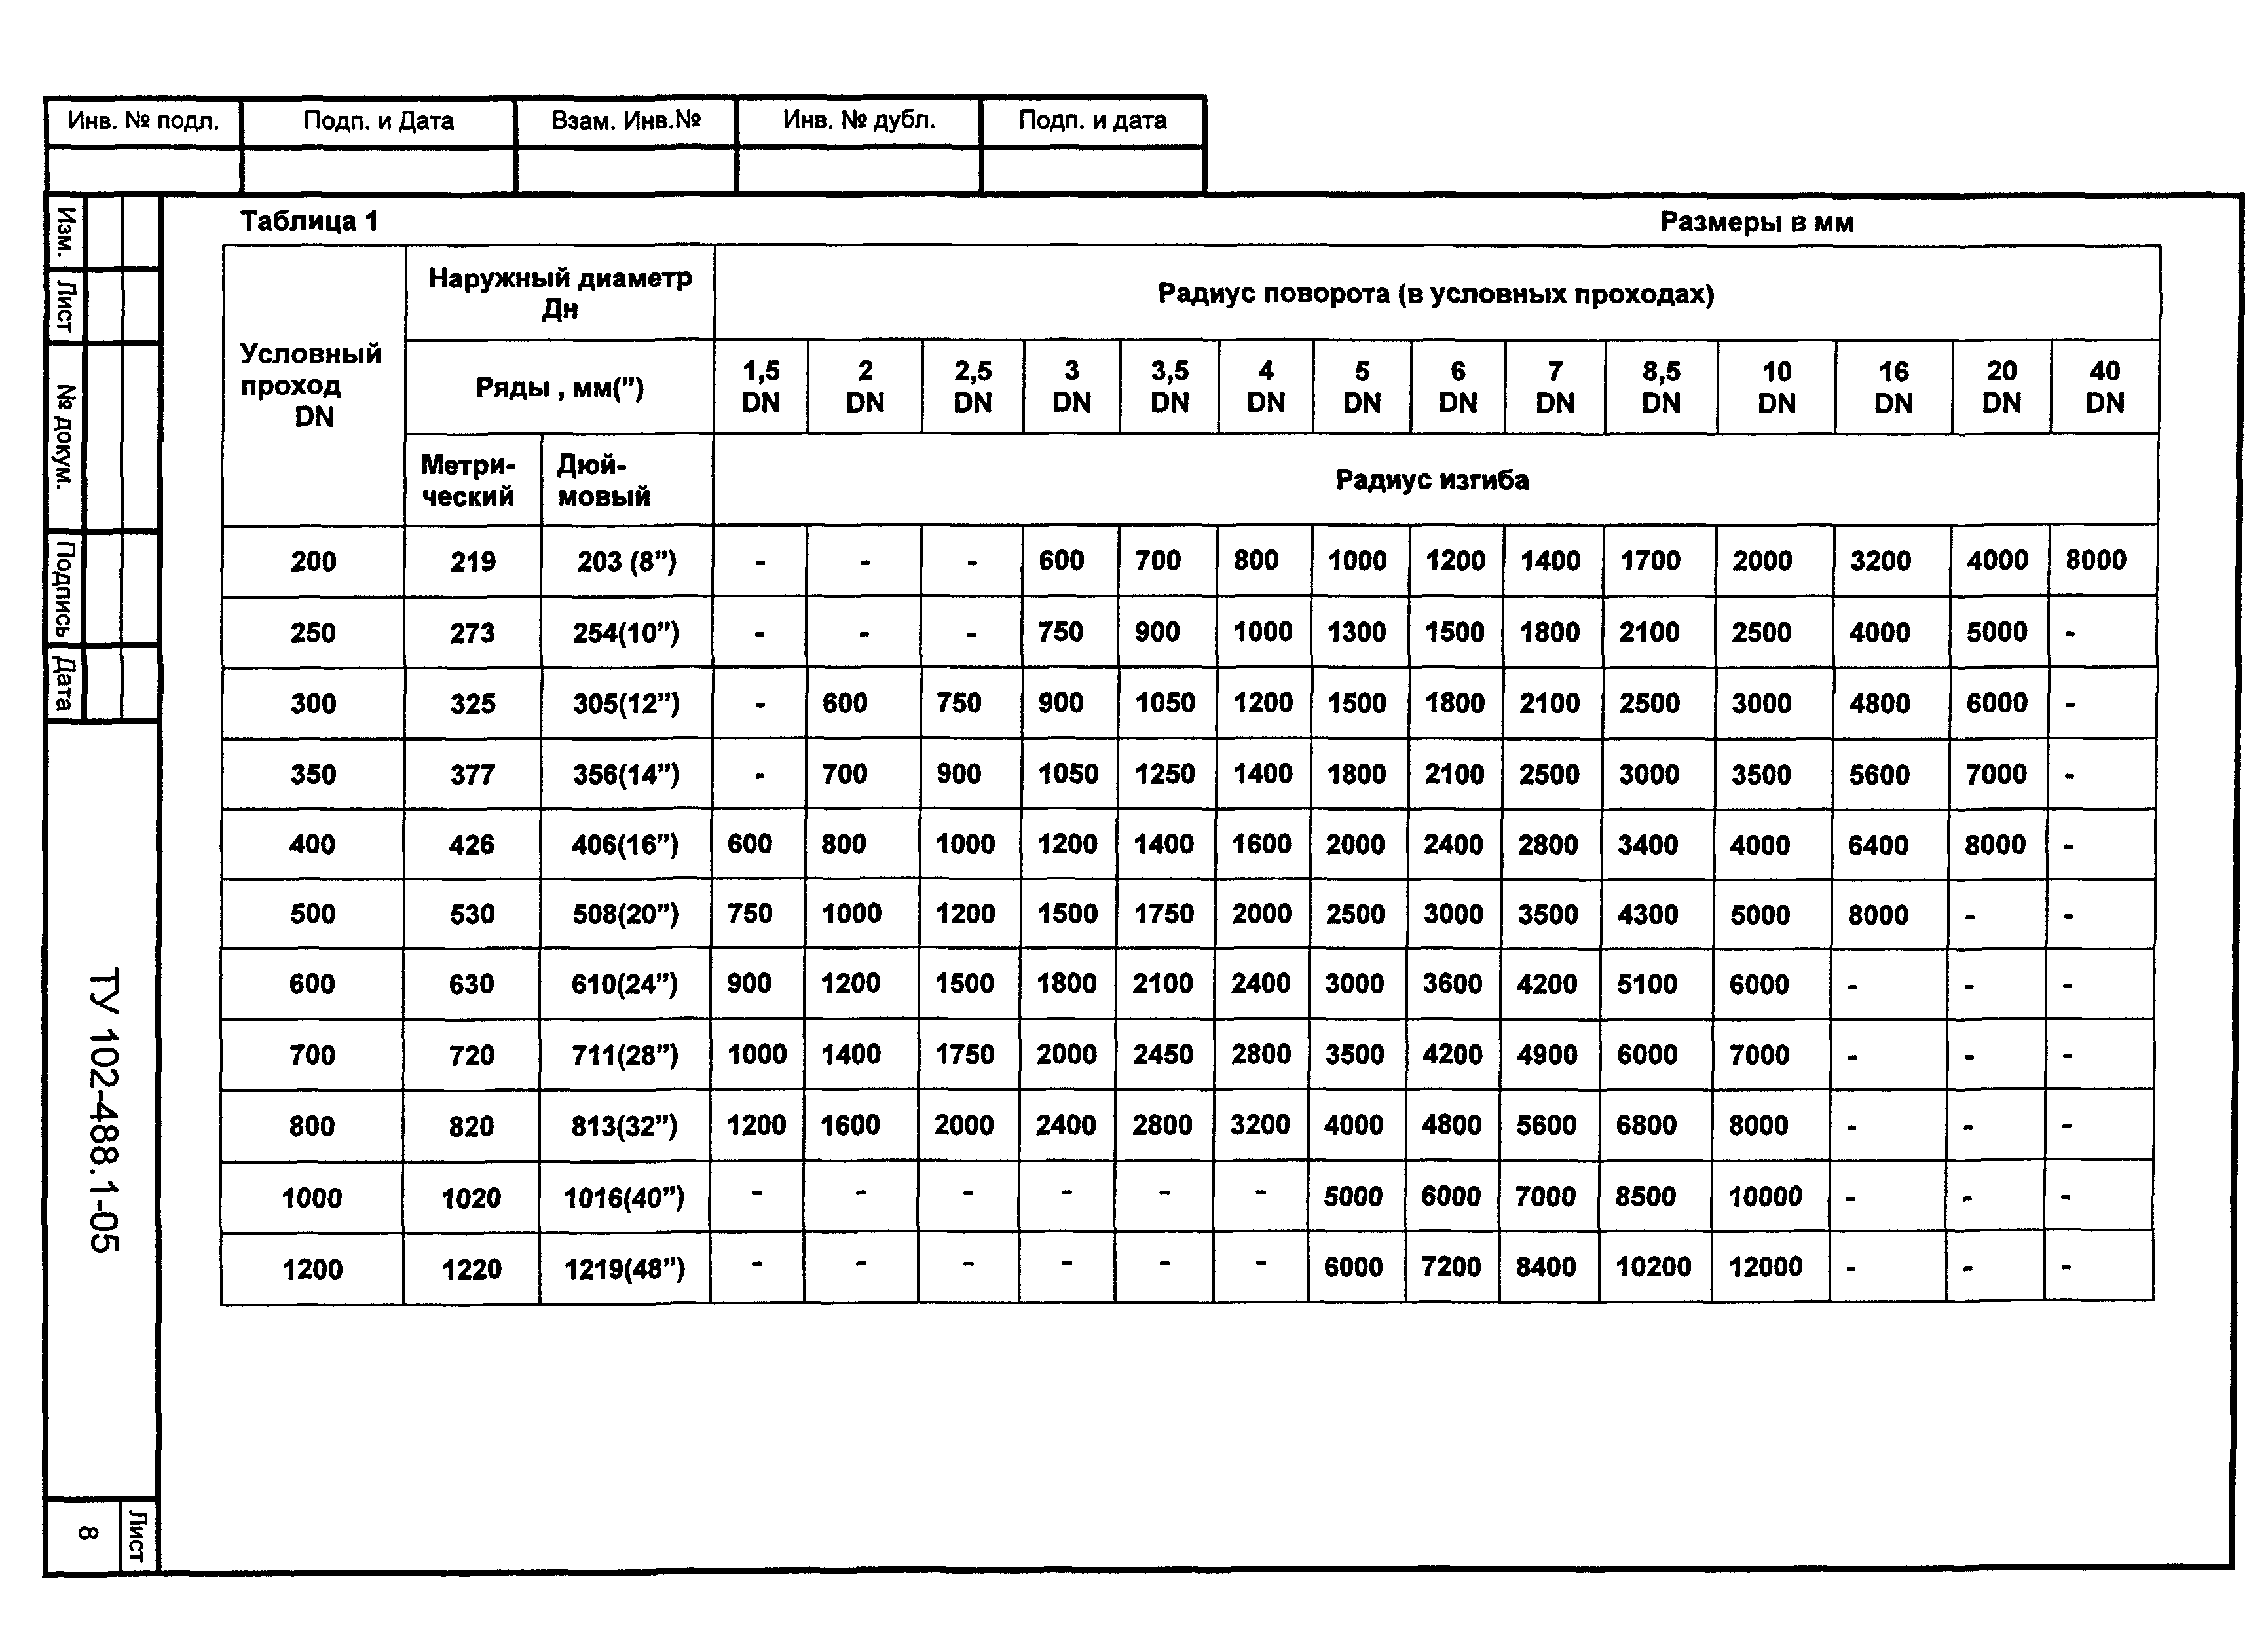 ТУ 102-488.1-05